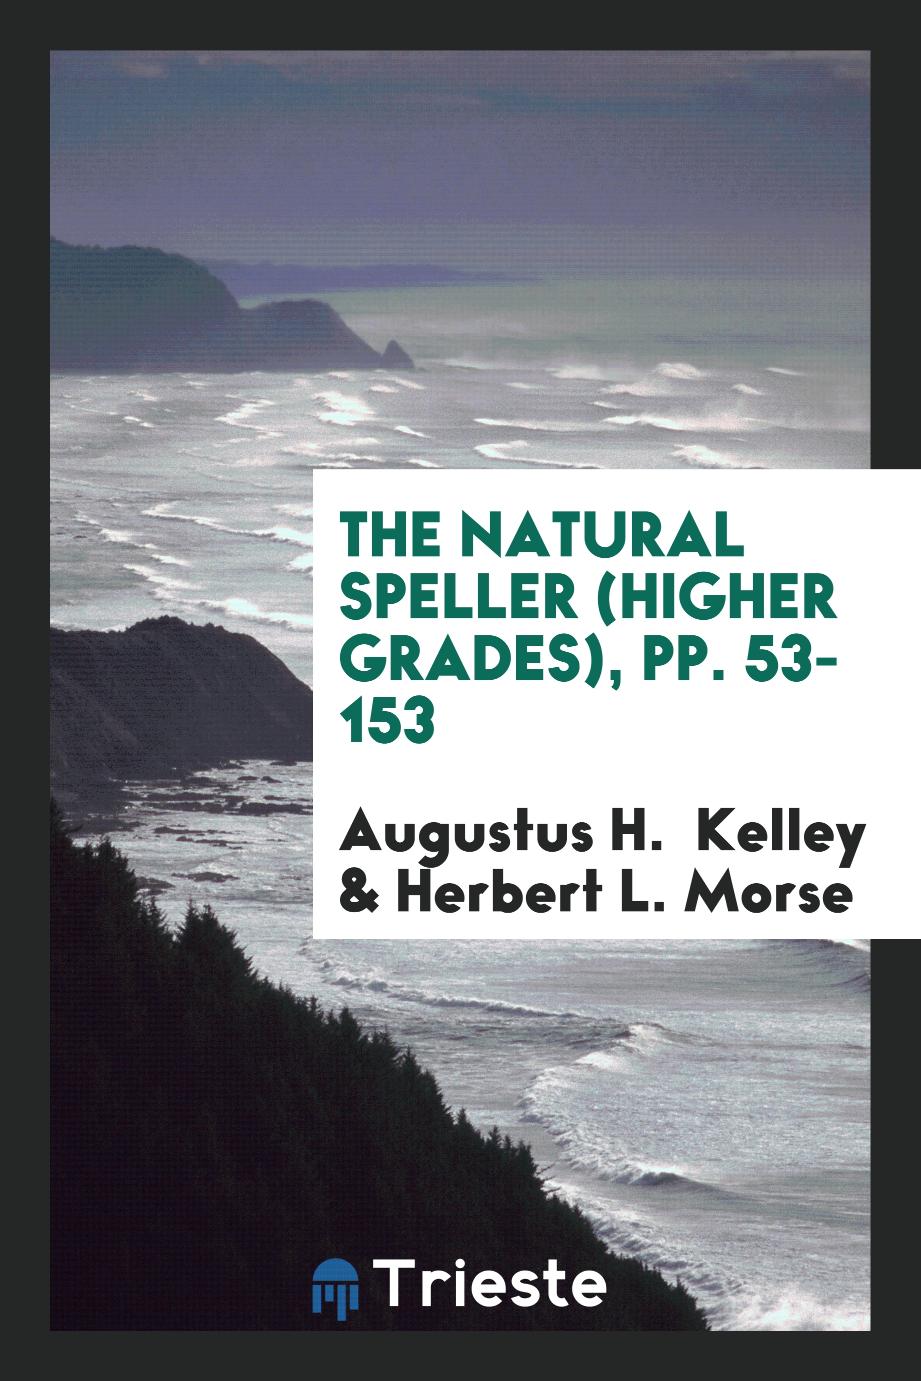 The Natural Speller (Higher Grades), pp. 53-153